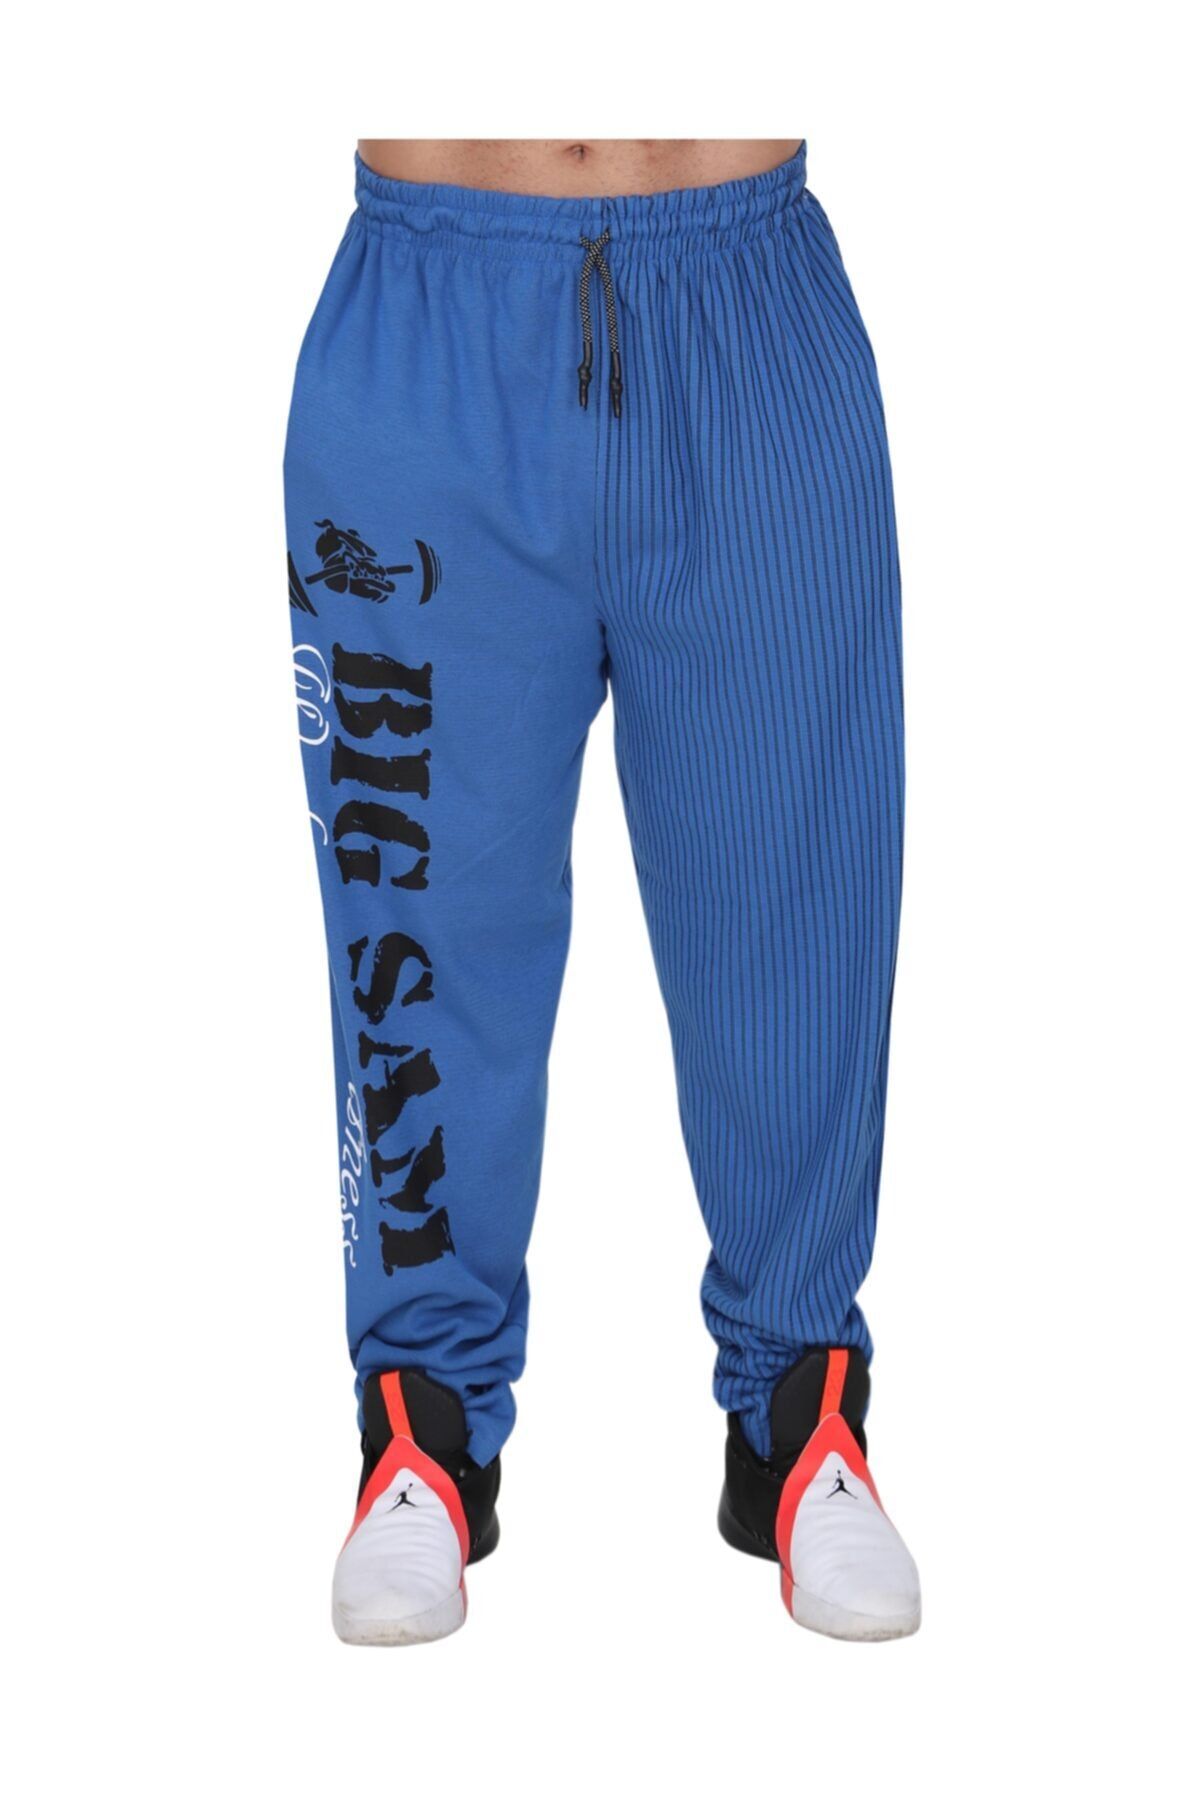 Big Sam Geniş Kesim Body Pantolon Eşofman Altı Mavi 1175